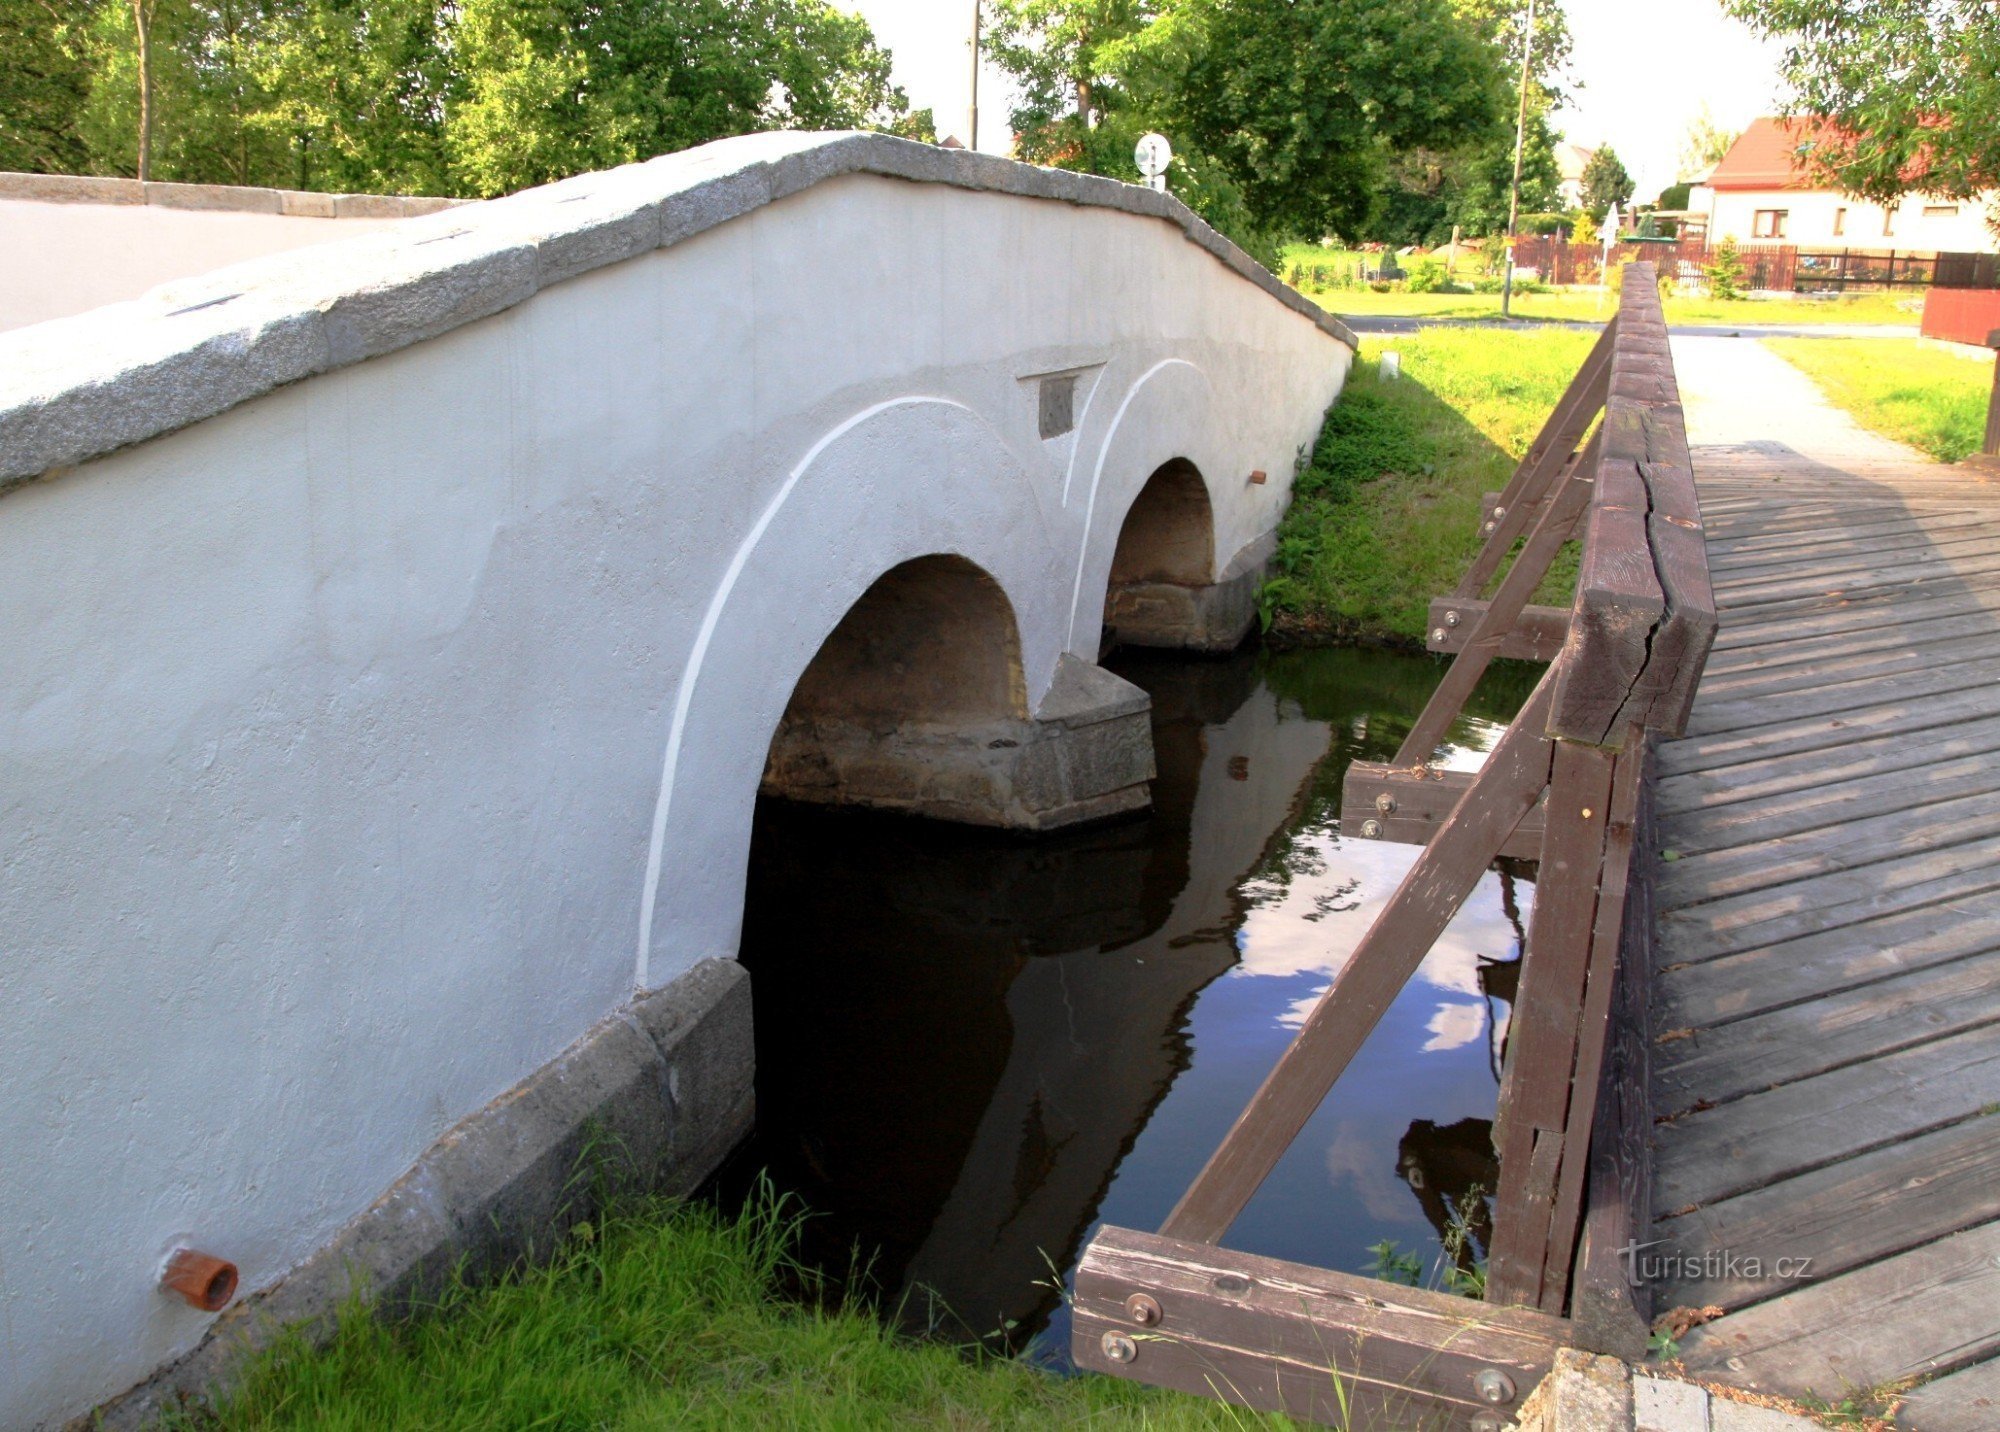 Žďár nad Sázavou - historic double-arched stone bridge